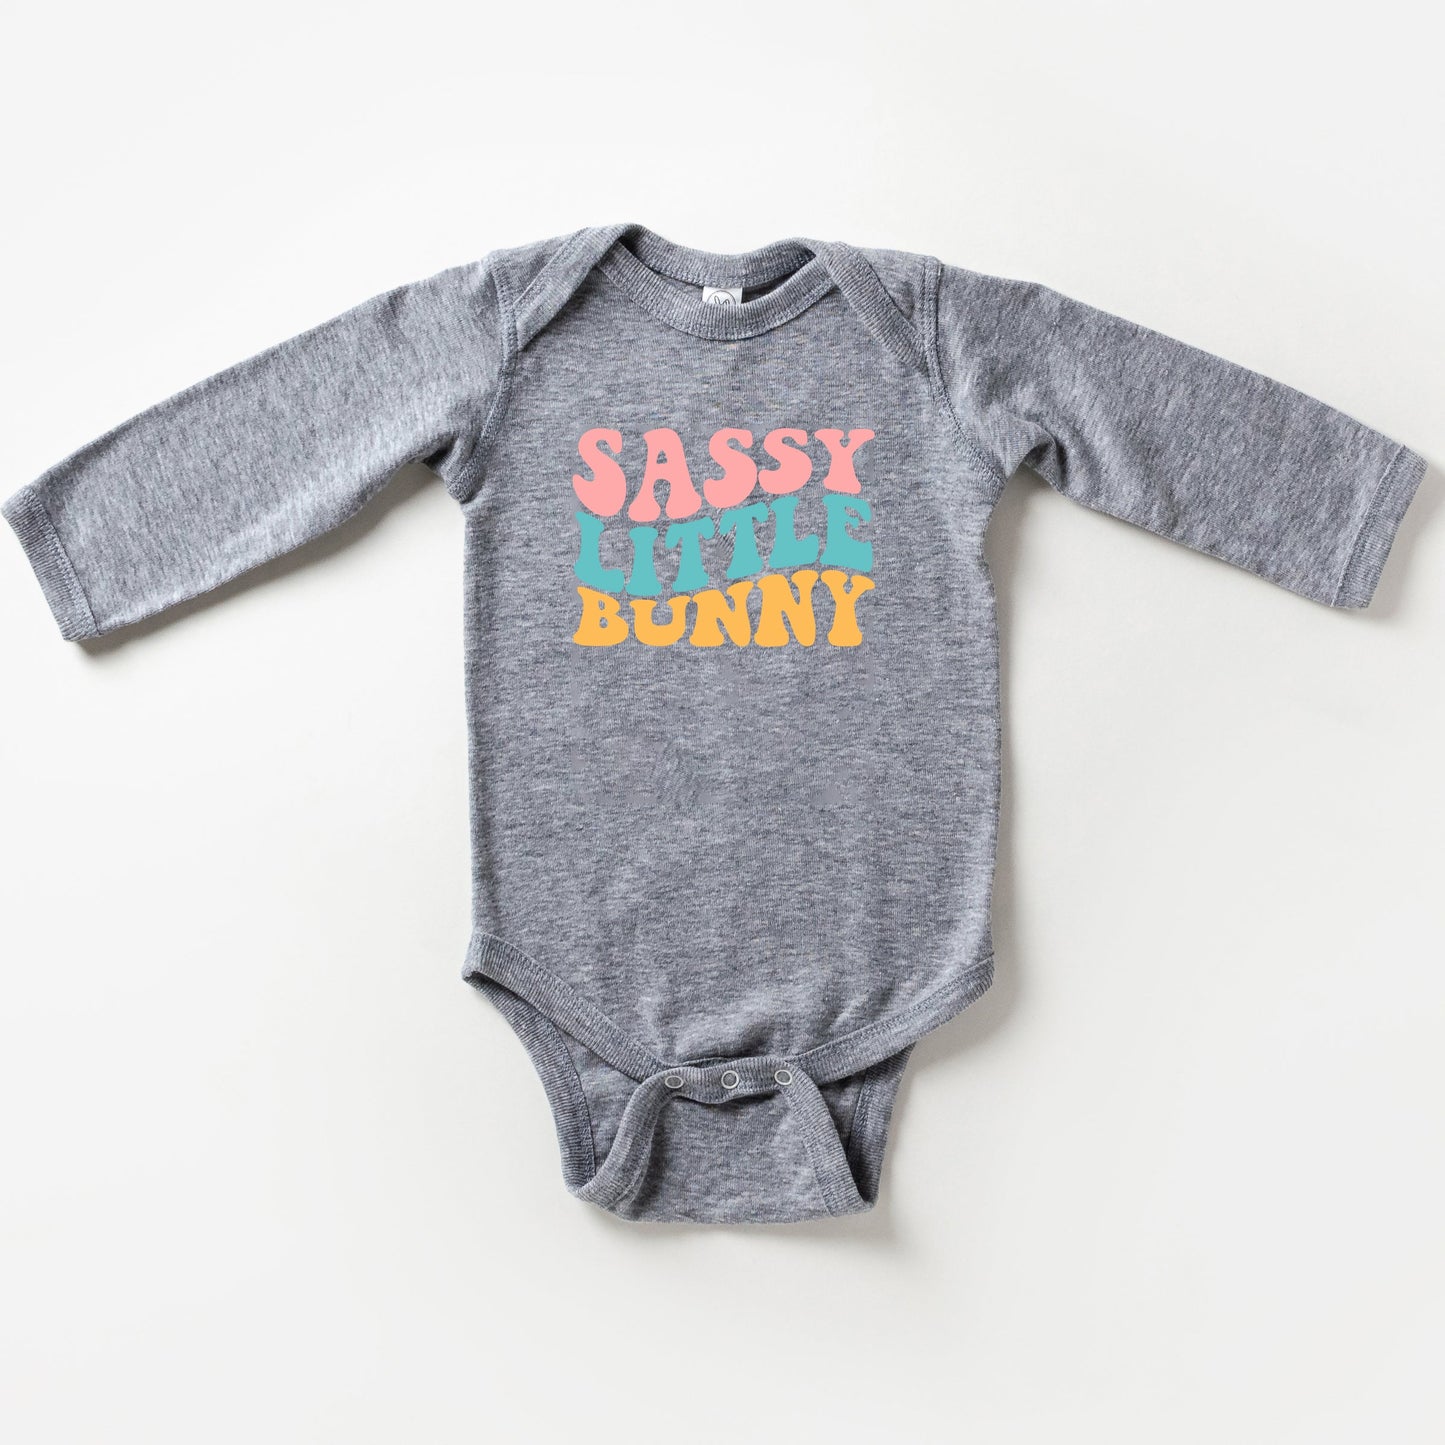 Sassy Little Bunny | Baby Long Sleeve Onesie